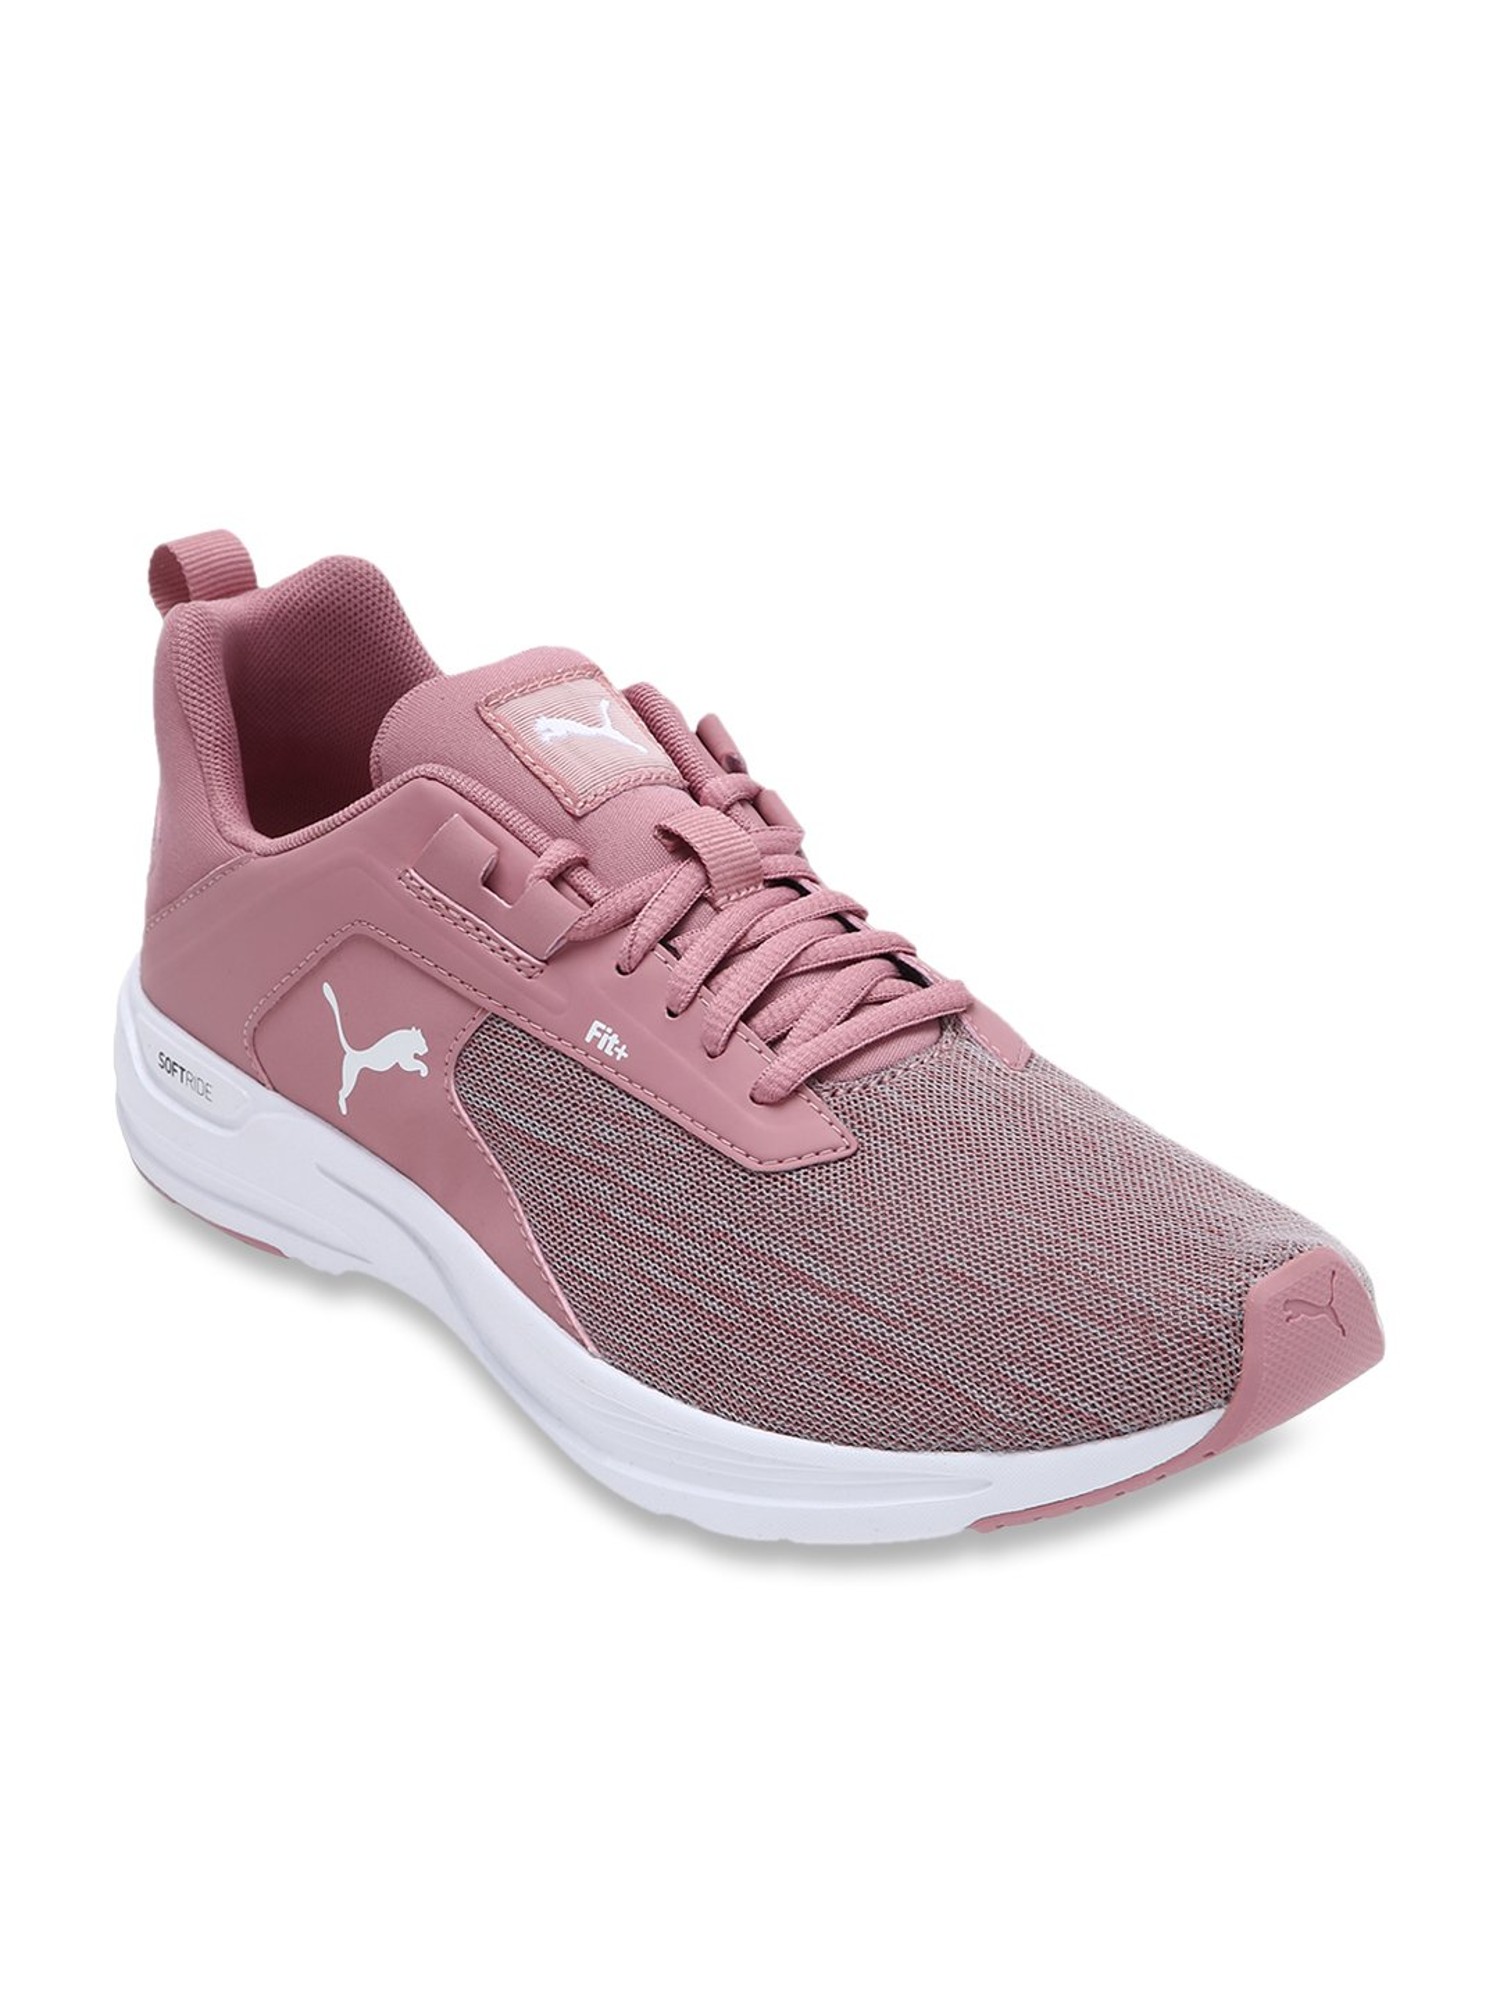 @ Puma Pink Men 2 Best Alt Comet Tata CLiQ Shoes Price for Buy at Running